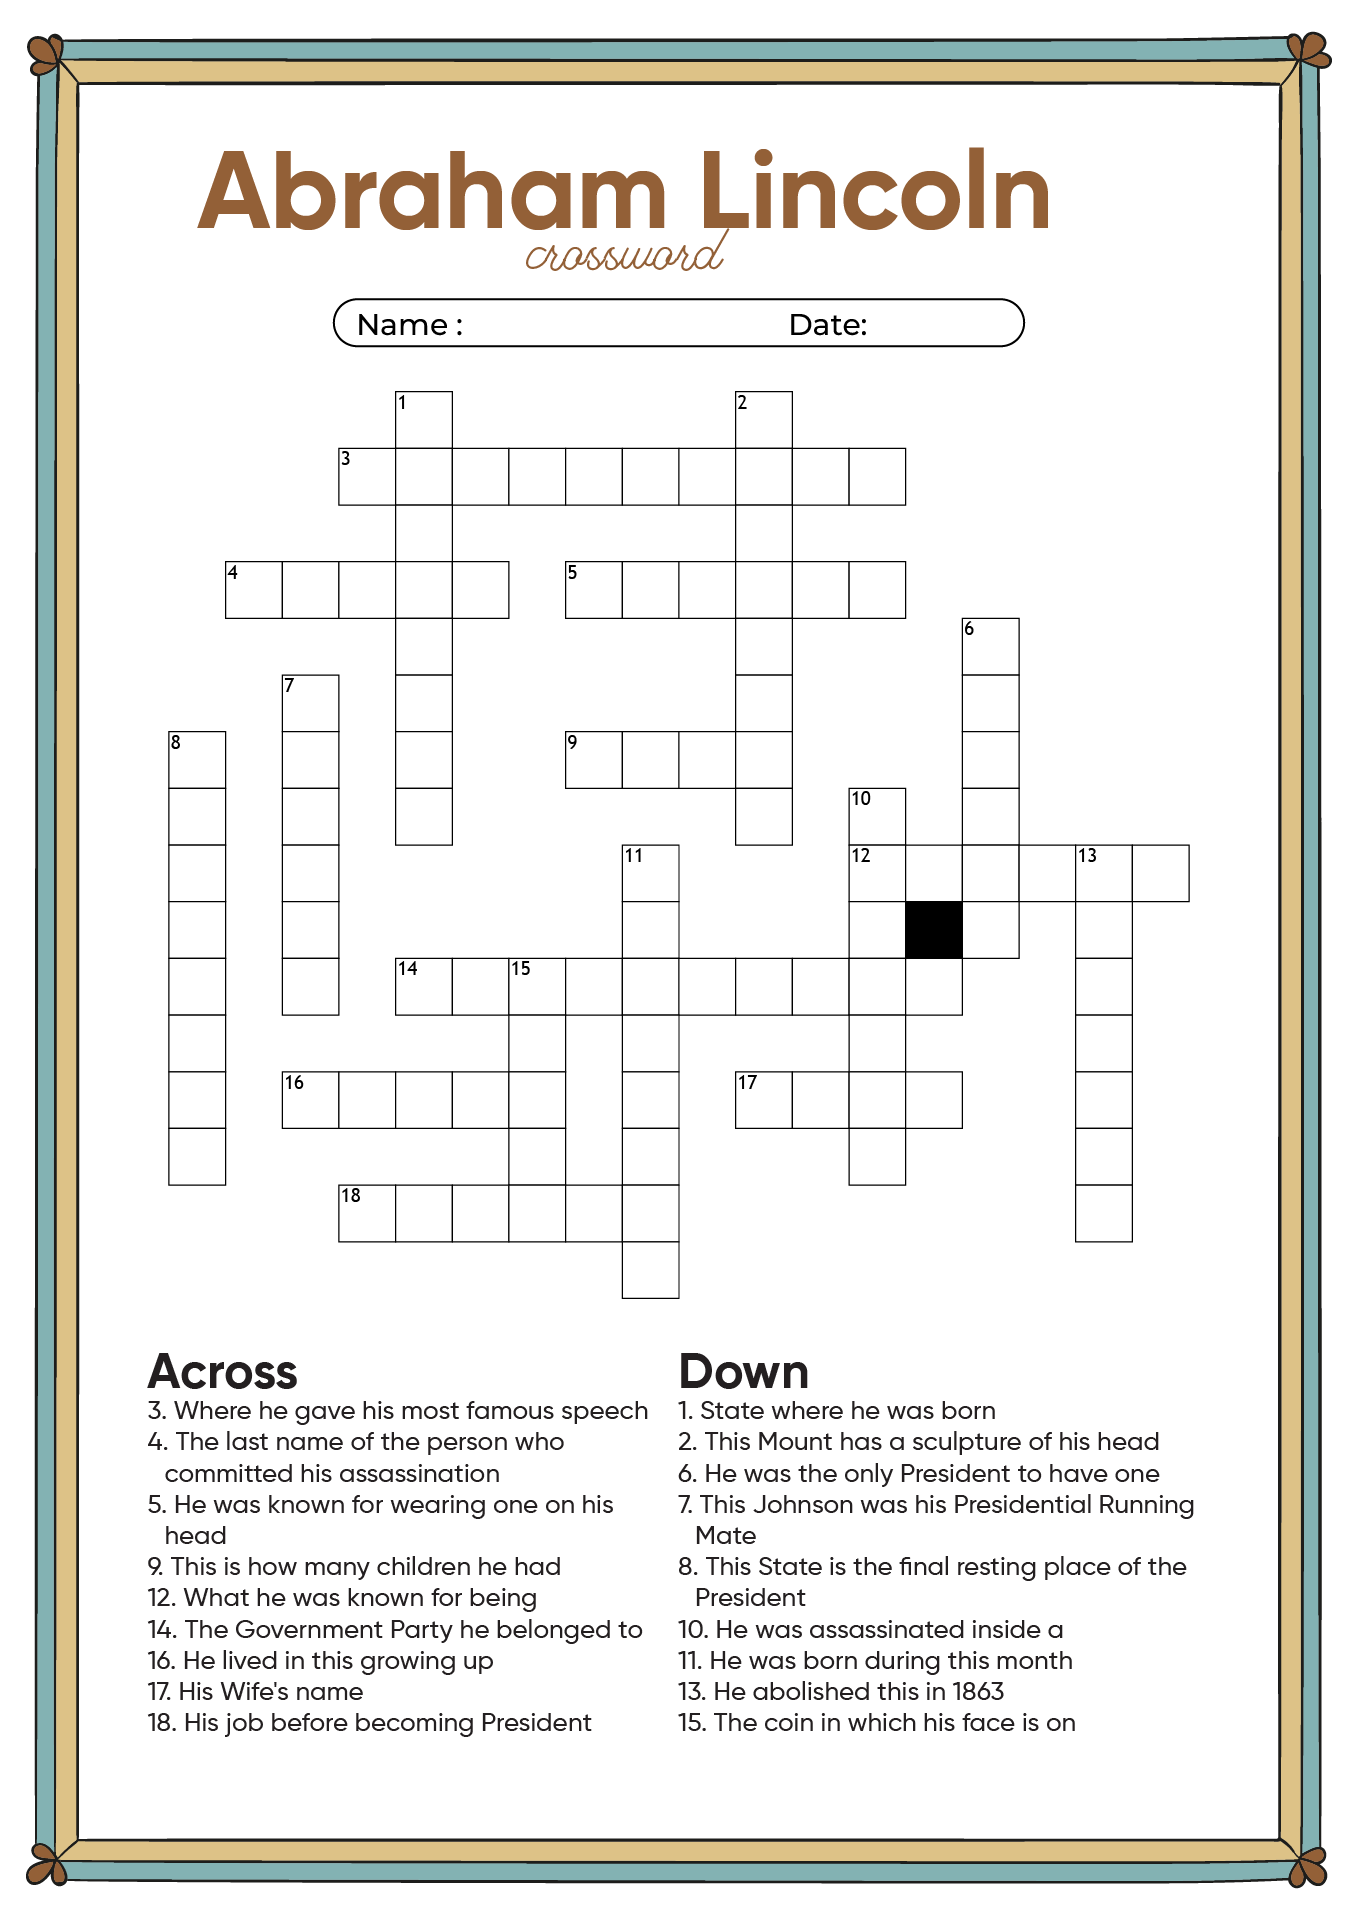 Abraham Lincoln Crossword Puzzle Printable